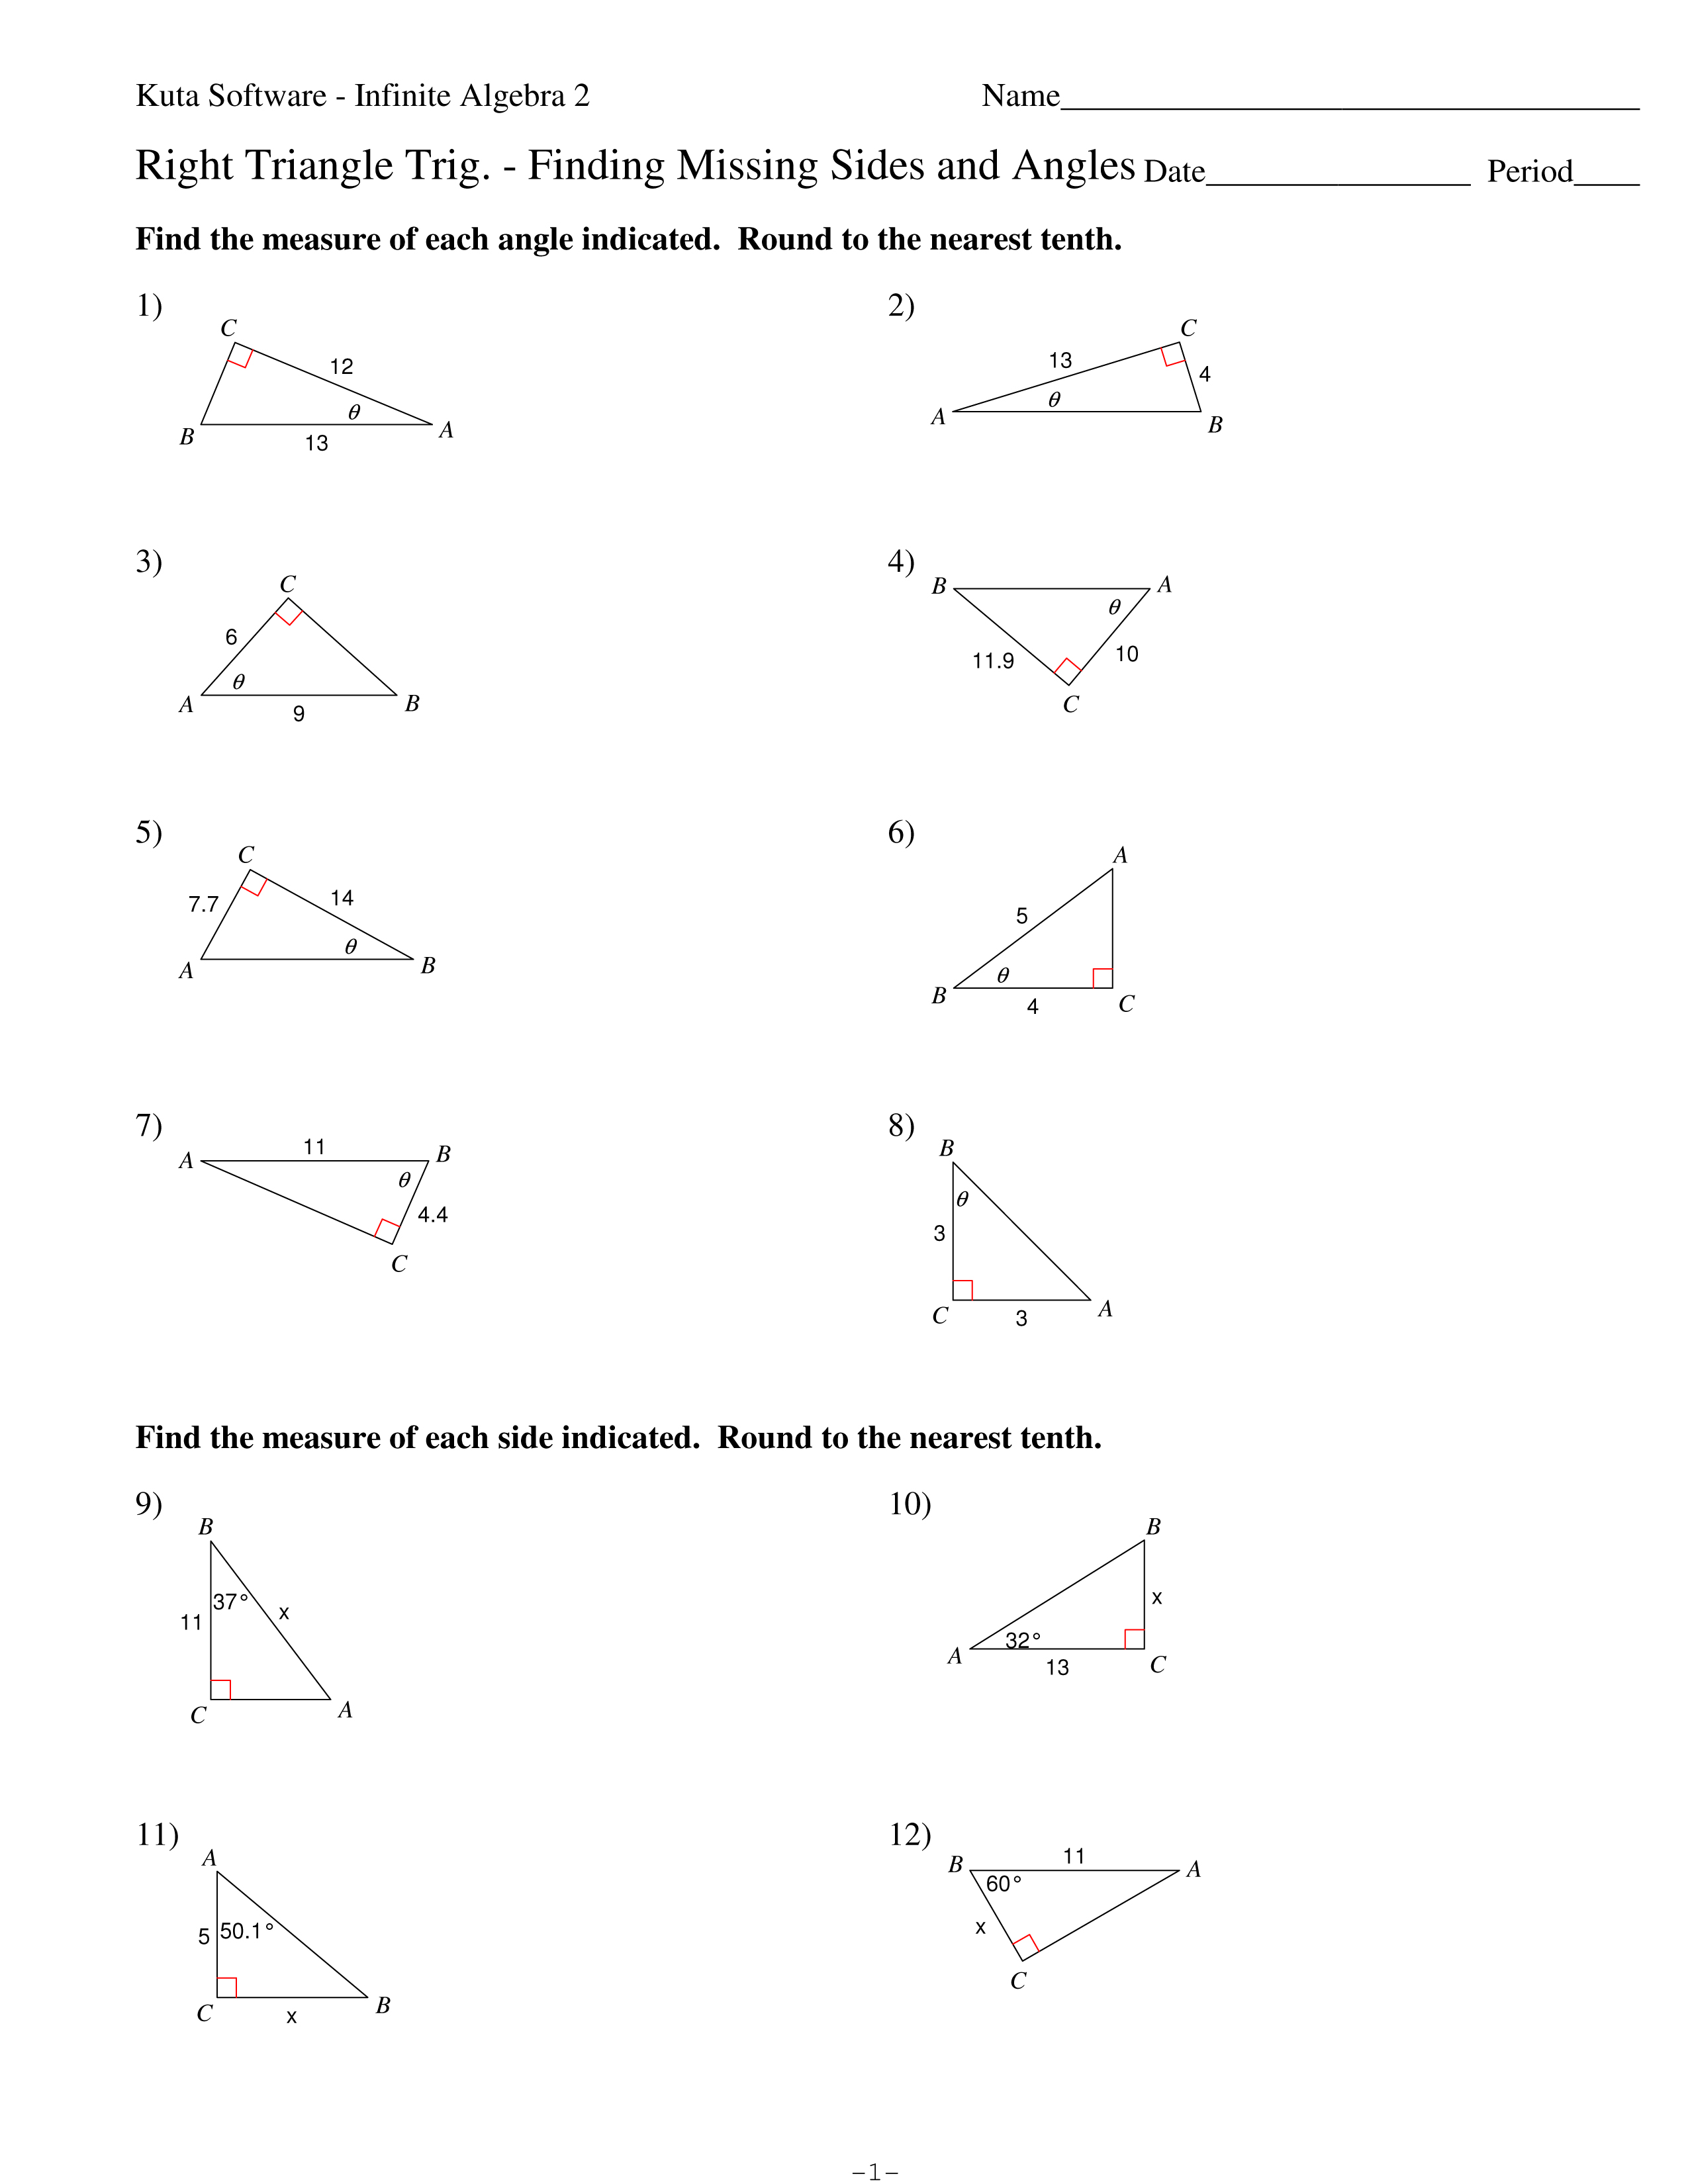 applying-trigonometric-ratios-worksheet-answers-inspiredeck